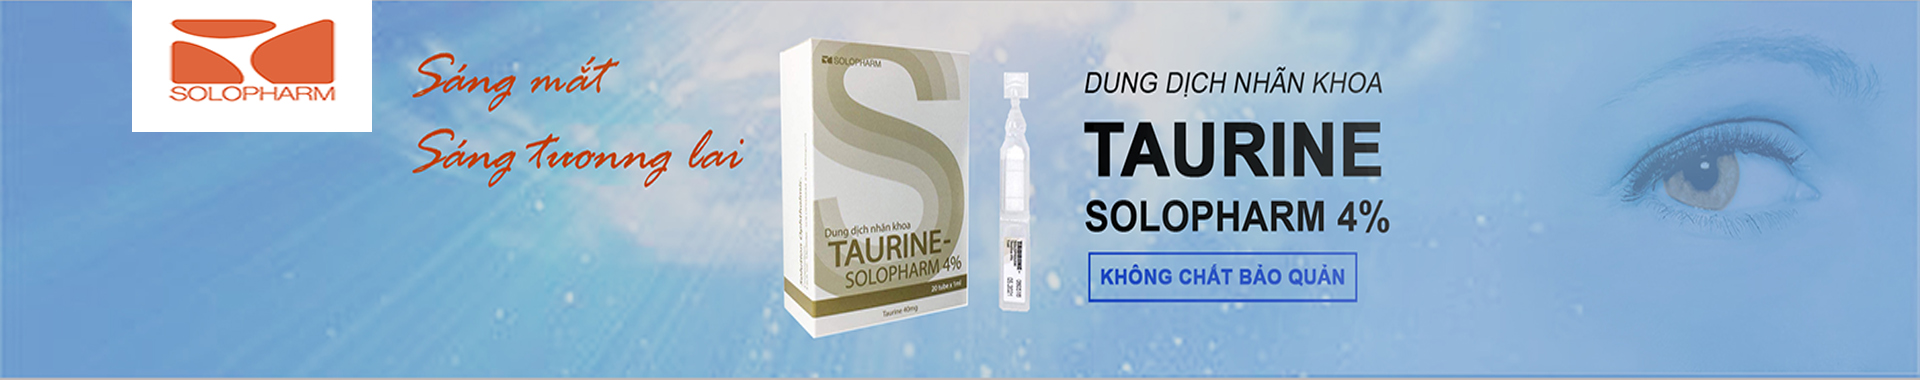 Dung dịch nhãn khoa Taurine Solopharm 4% 1ML